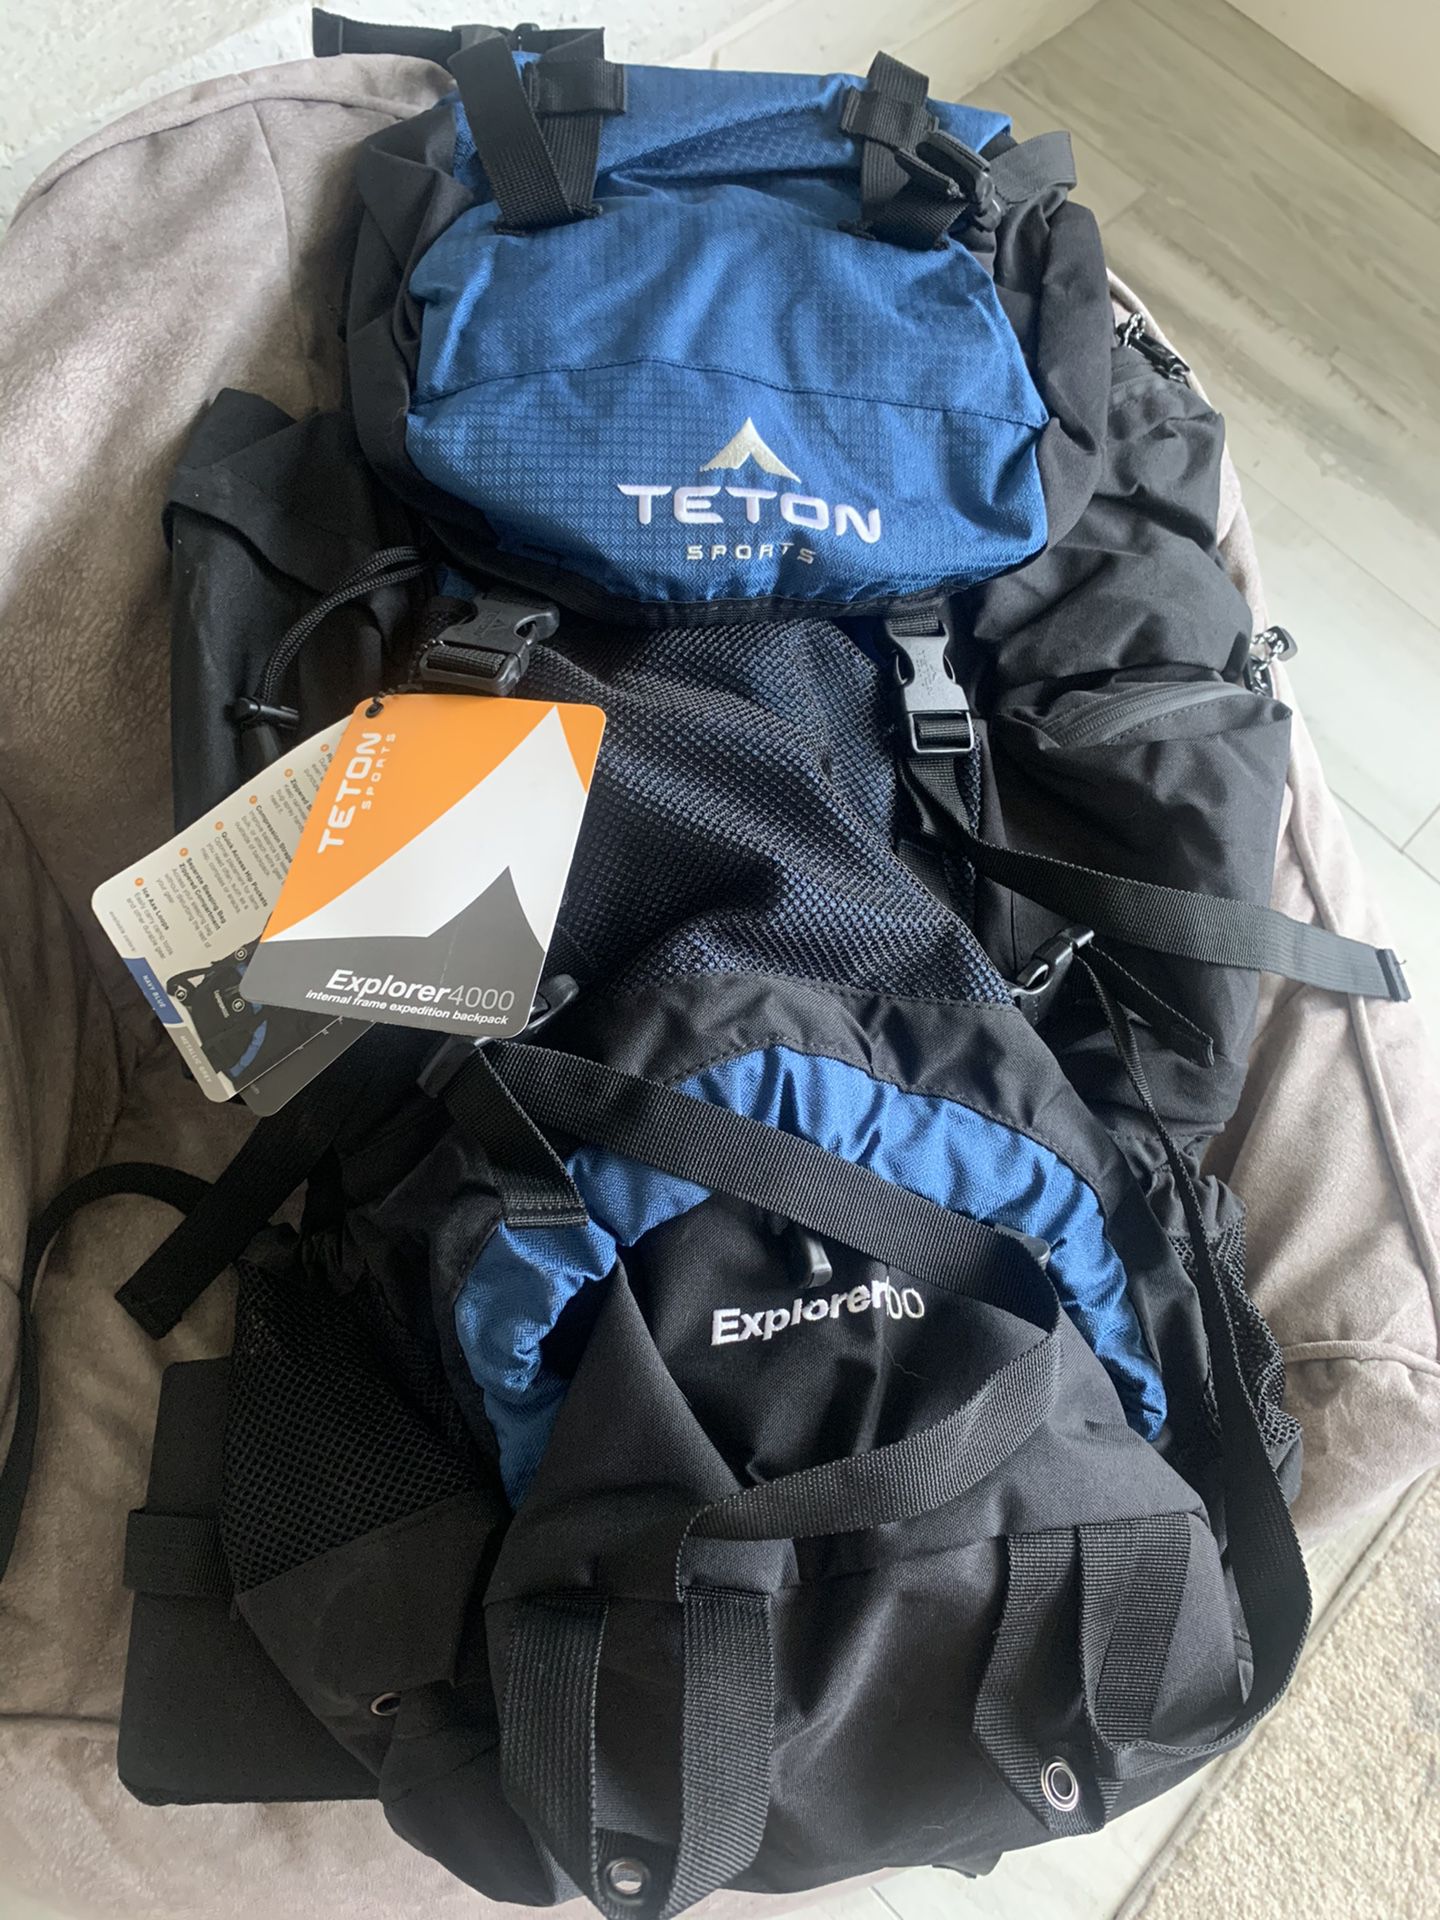 Teton Explorer 4000 hiking backpack-brand new